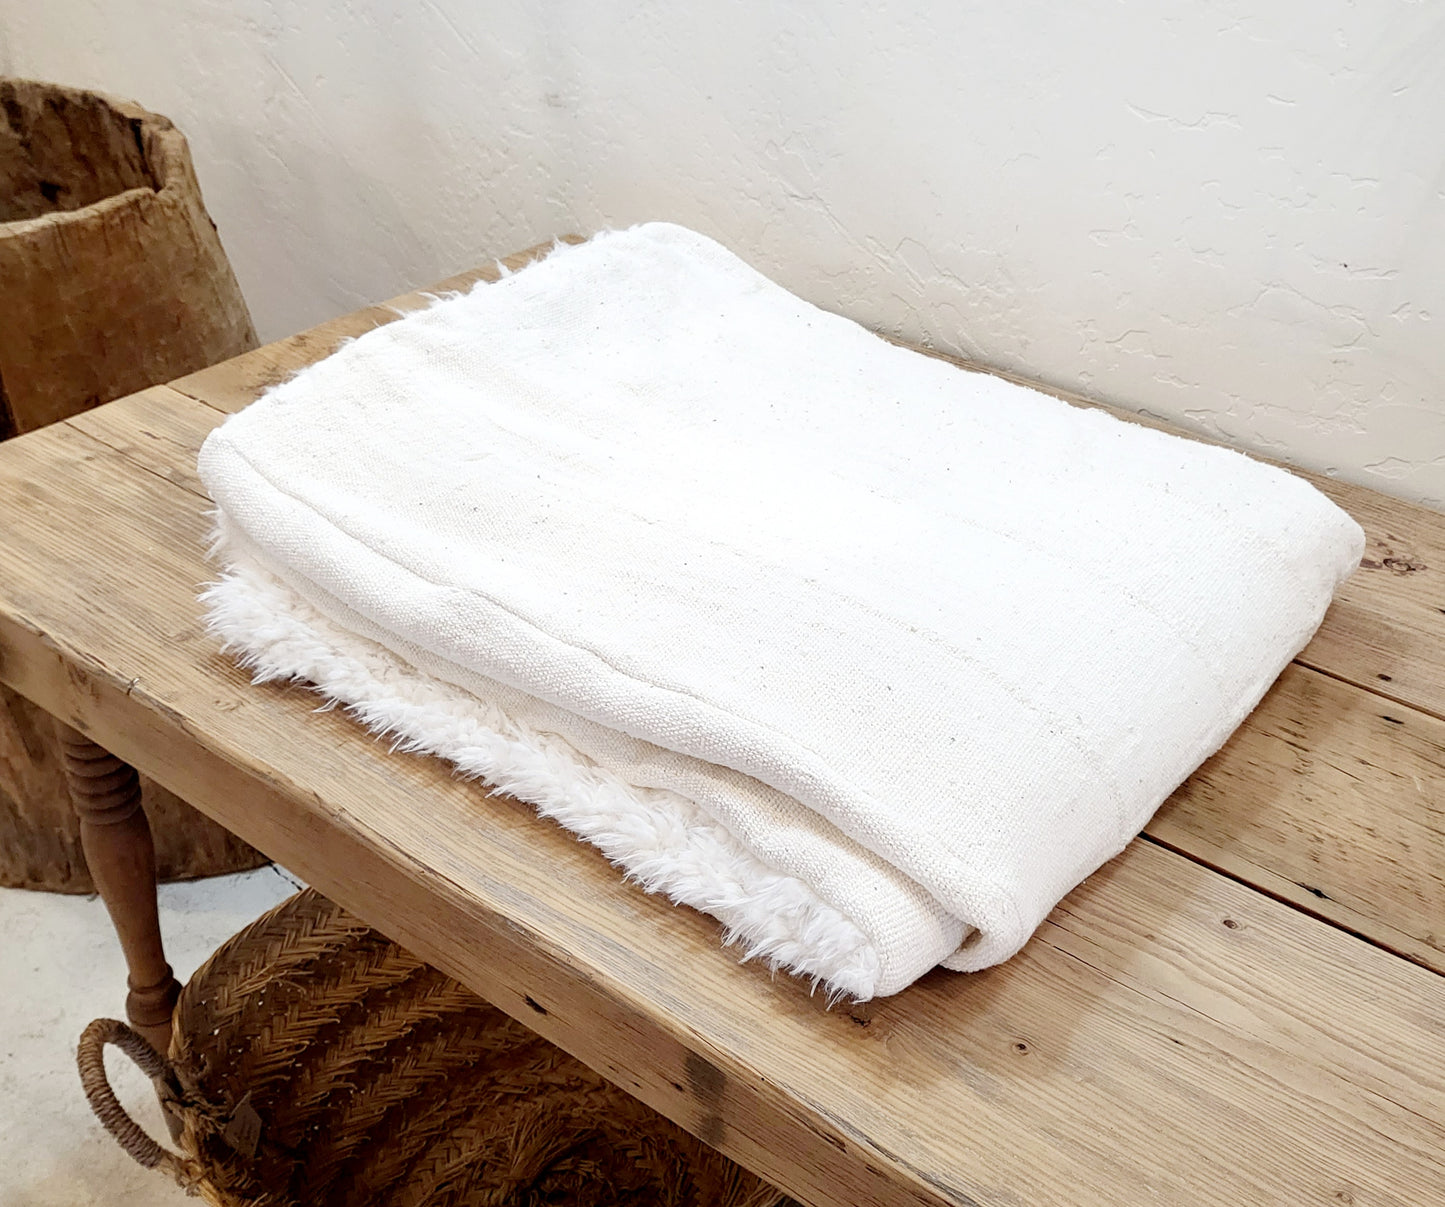 Hygge Mudcloth + Fuzzy Blanket 4' x 6'